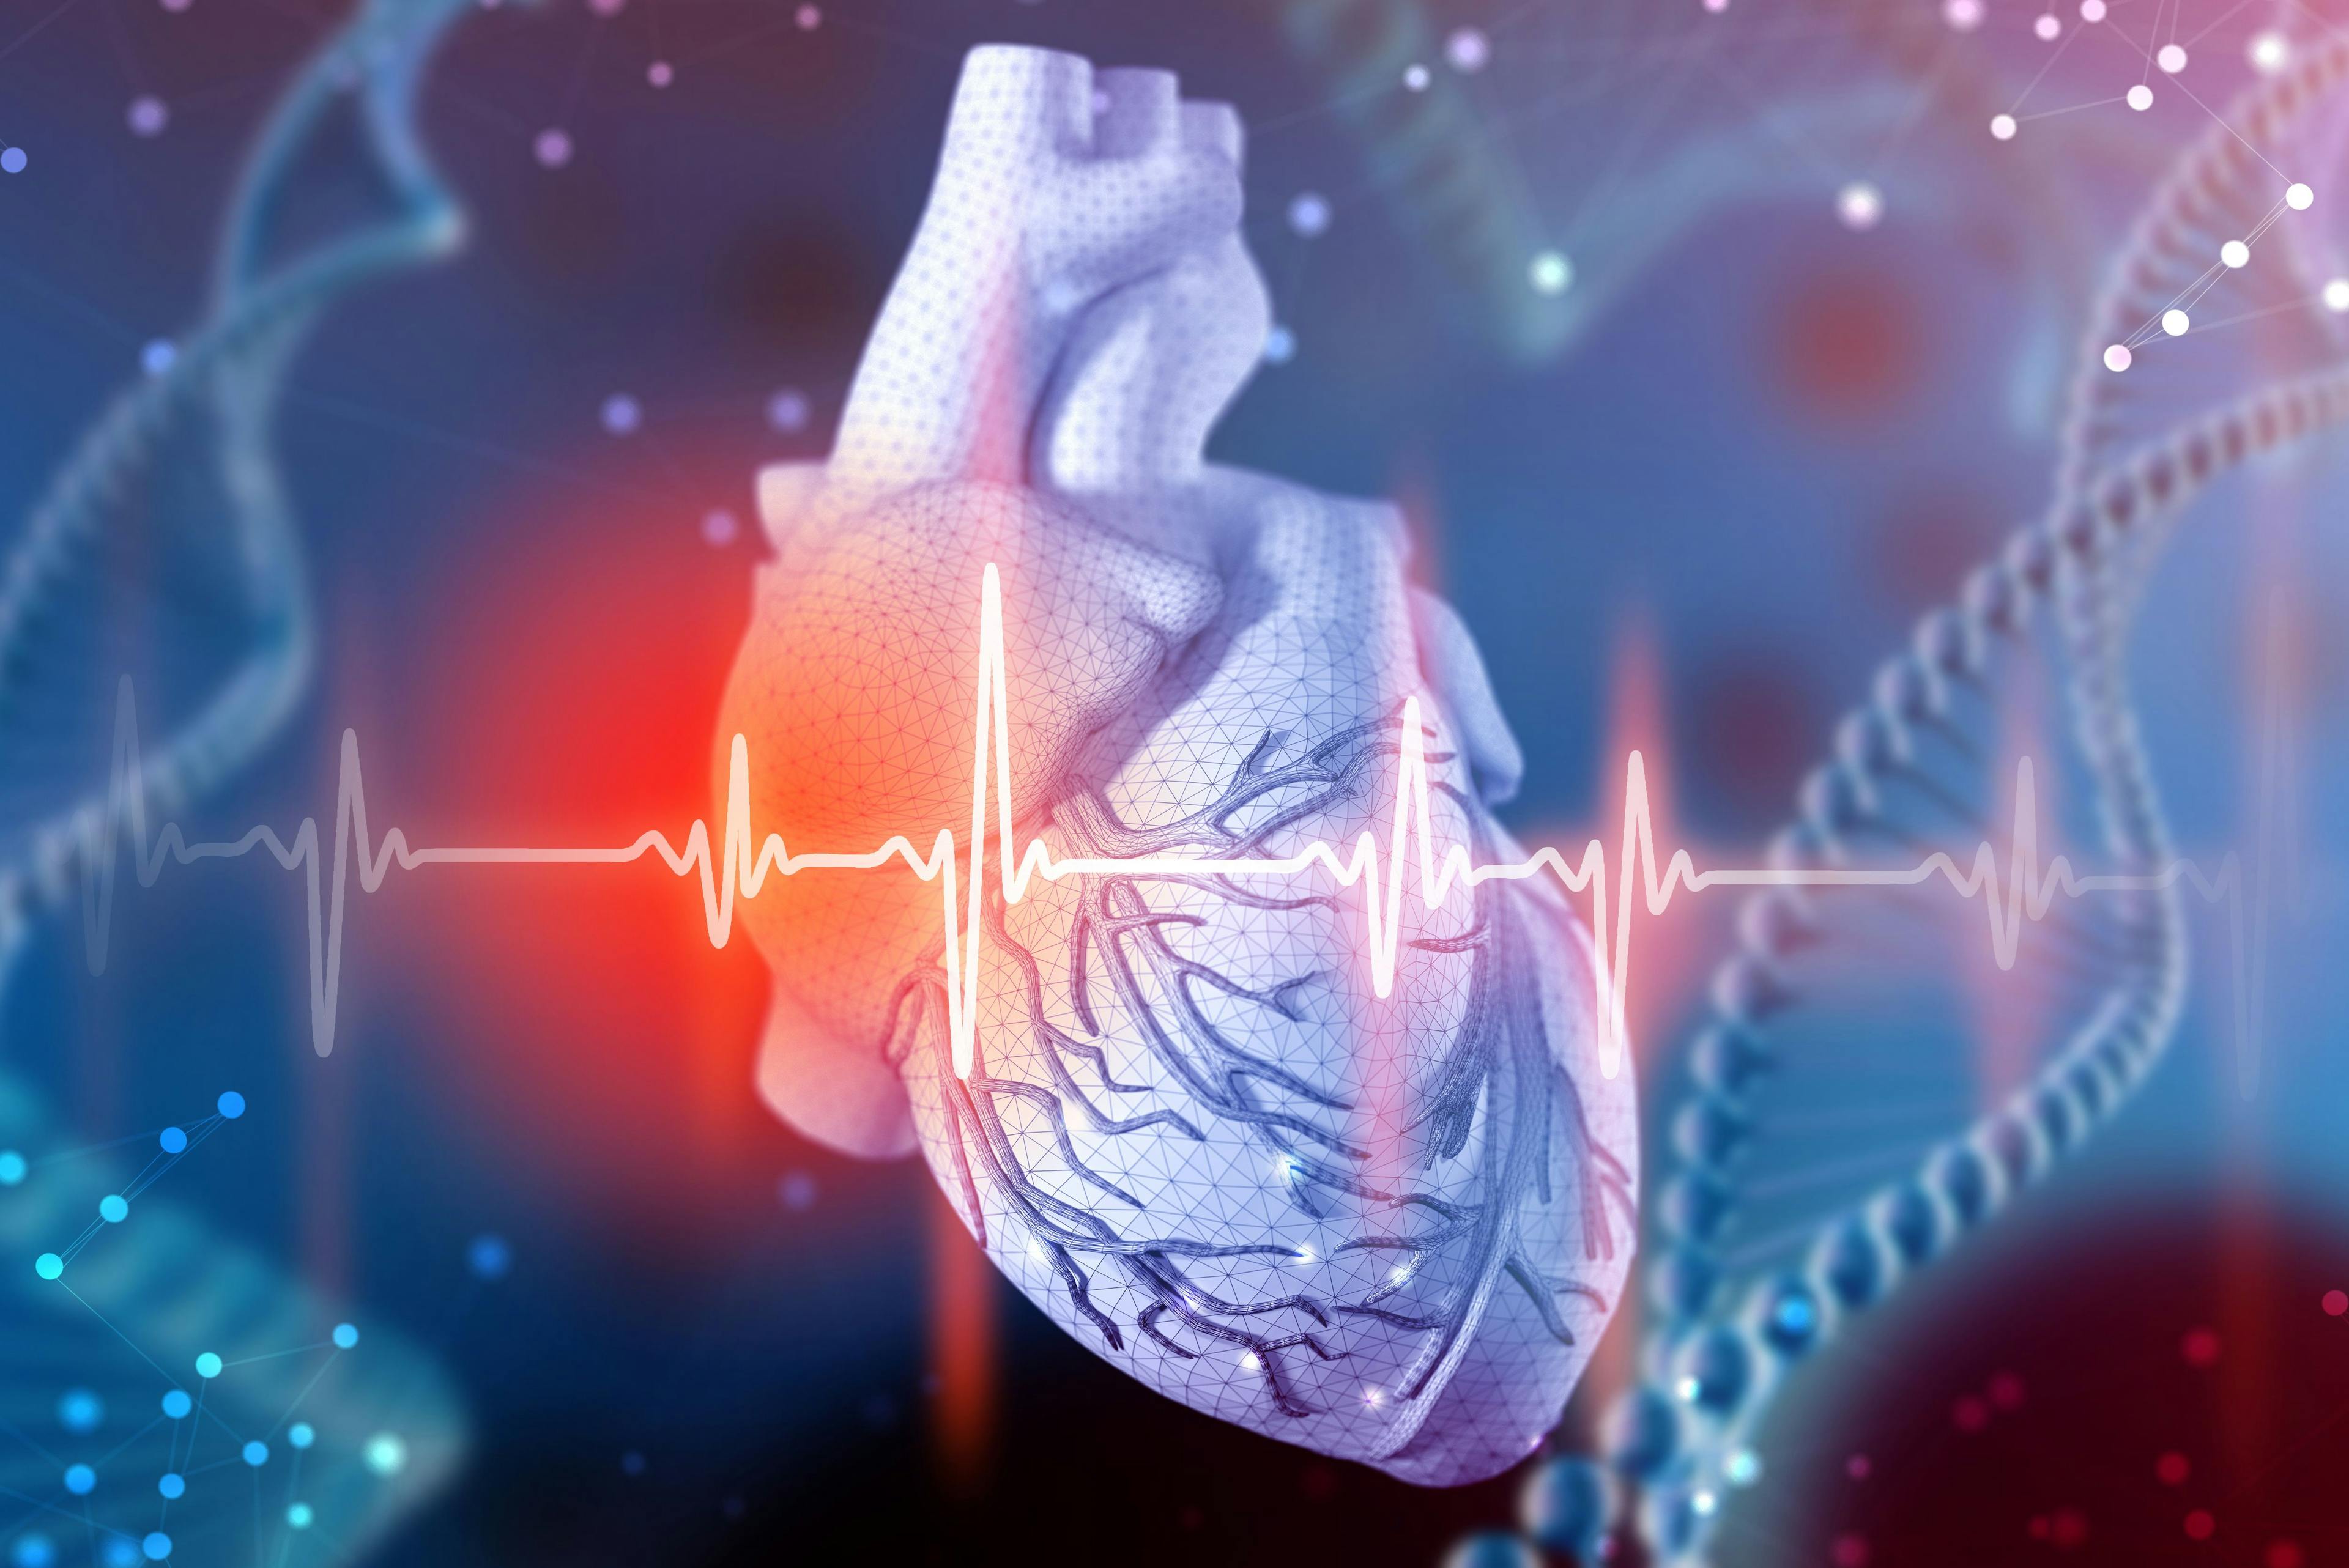 Women at Higher Risk of Heart Failure, Death Following First Heart Attack